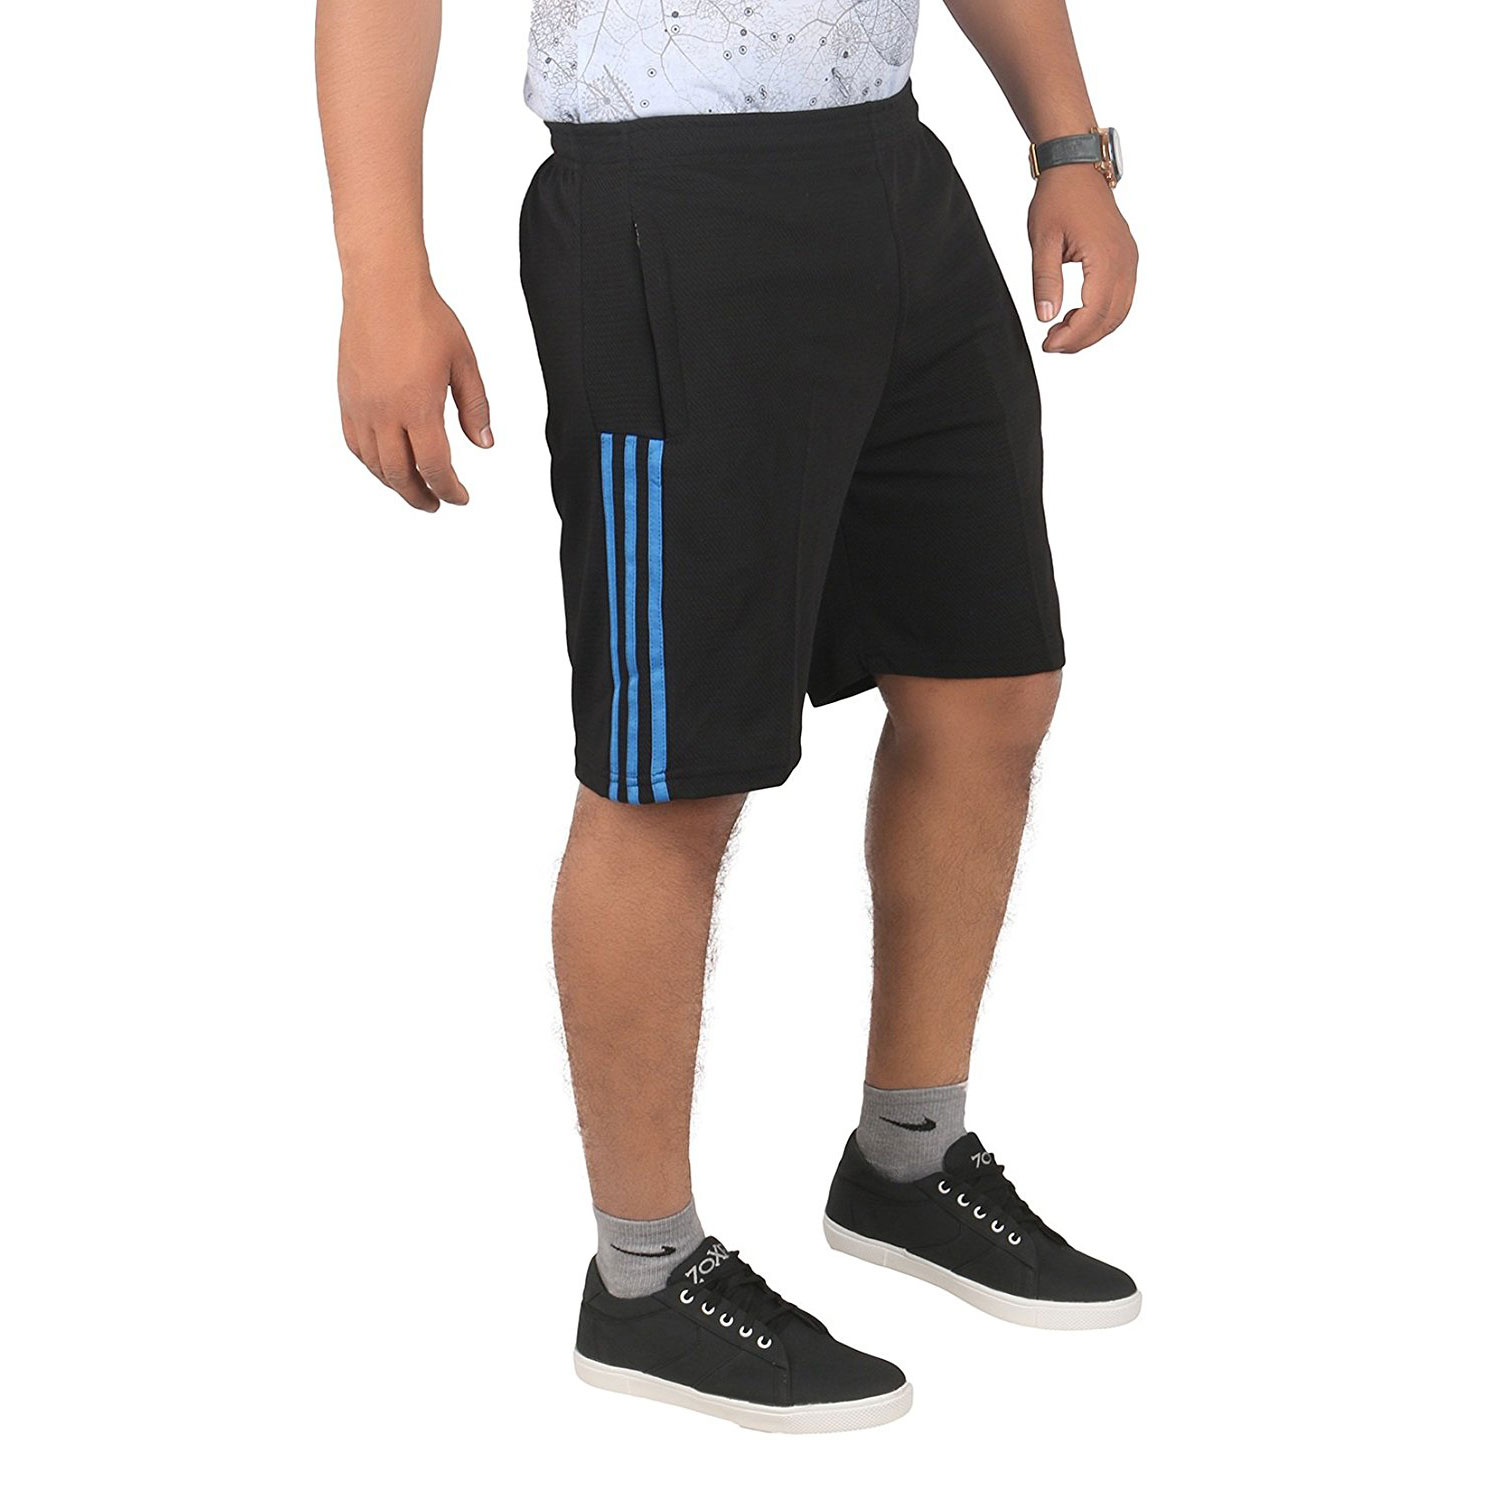  Men's Polyester Shorts, Gym Half Pants